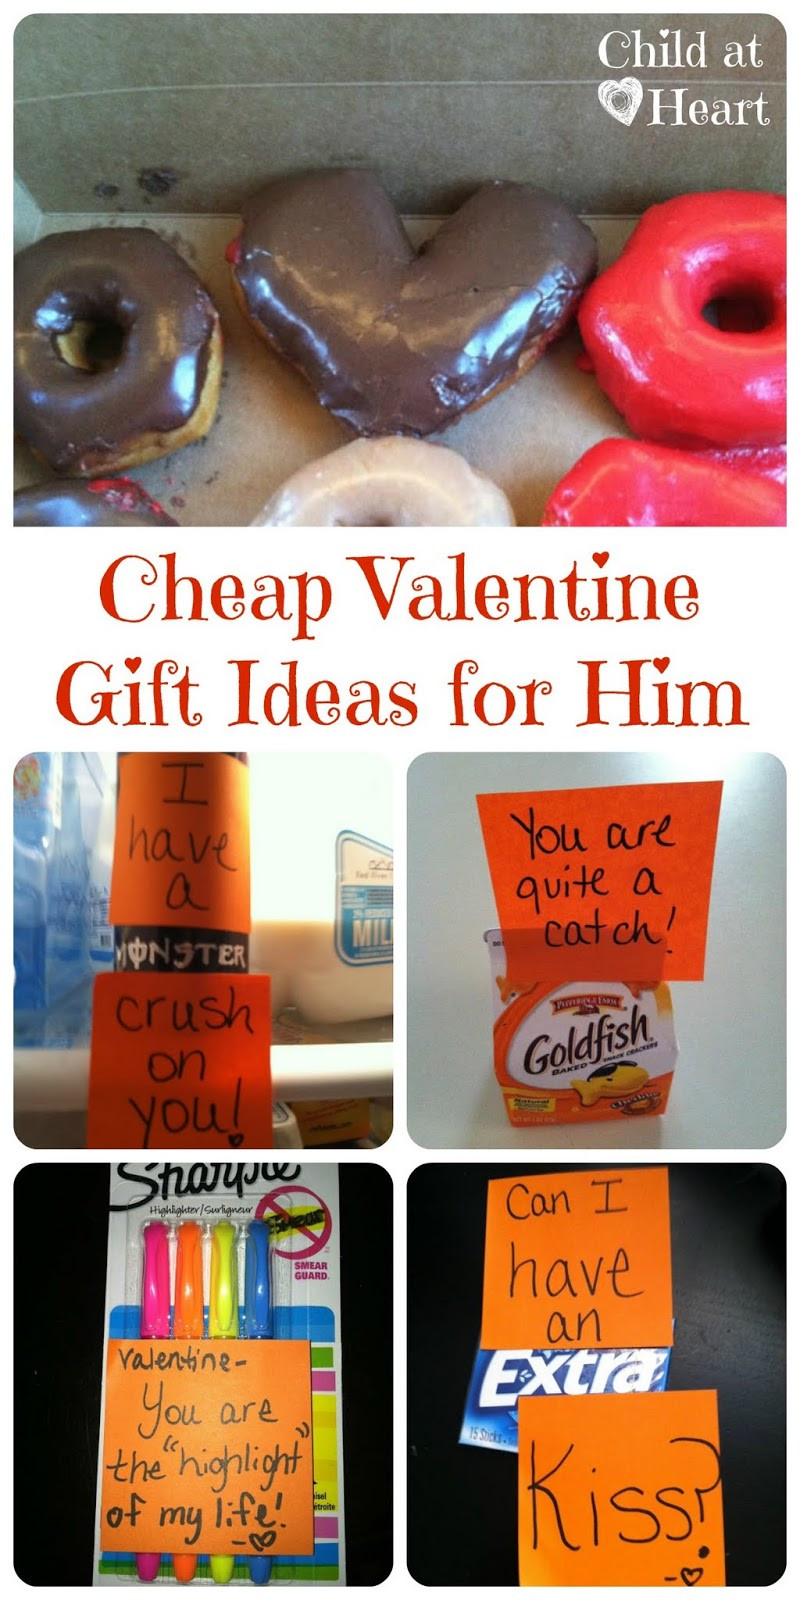 Cute Valentines Day Gift Ideas Boyfriend
 Cheap Valentine Gift Ideas for Him Child at Heart Blog